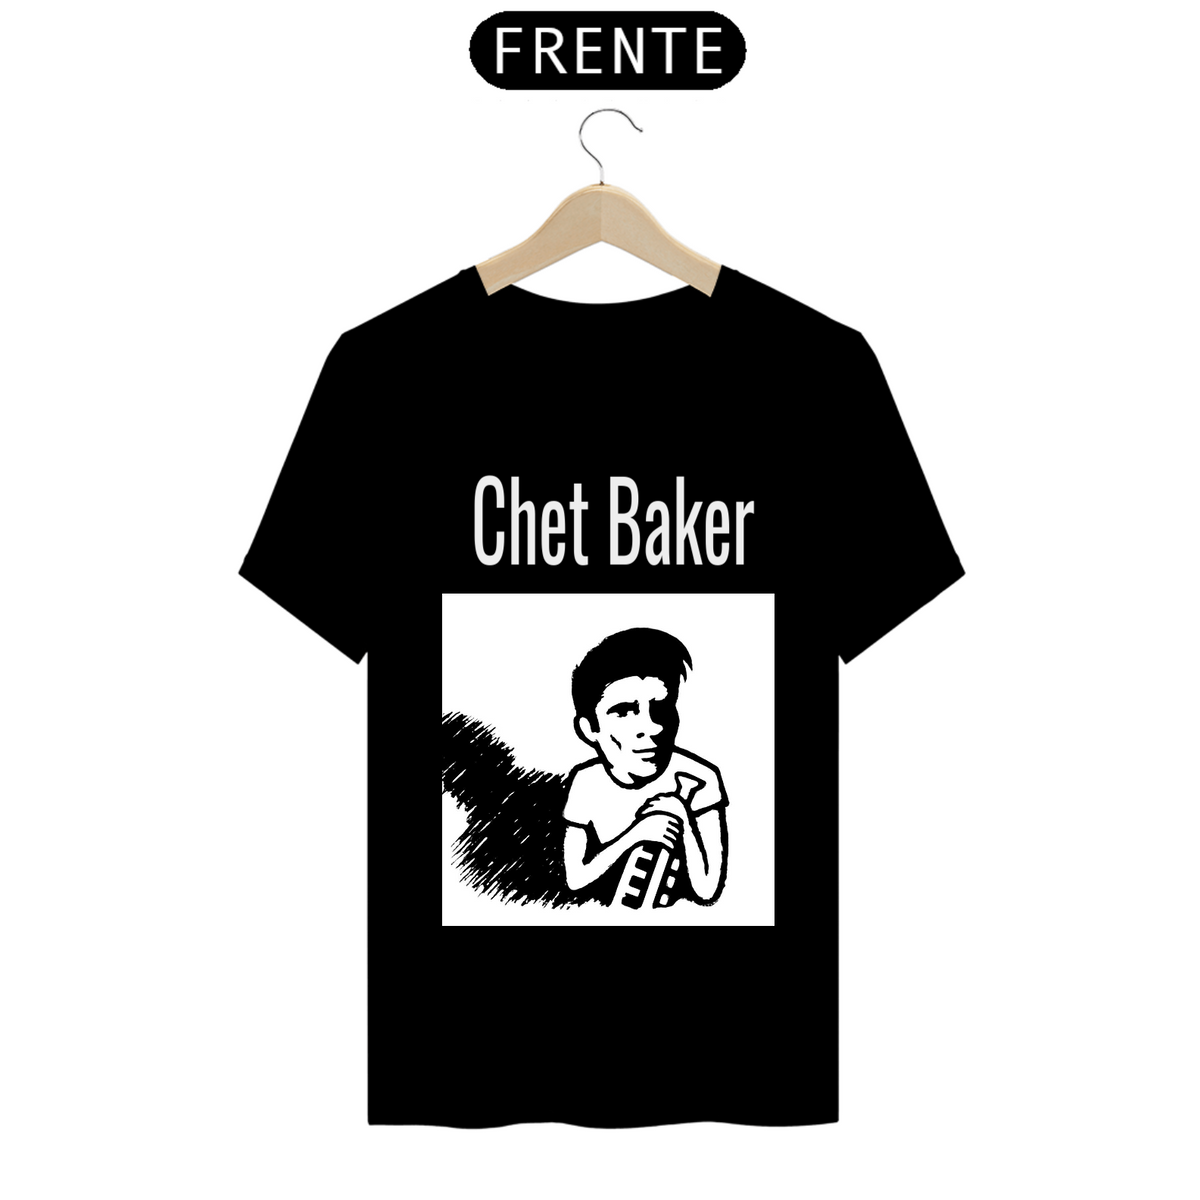 Nome do produto: Chet Baker